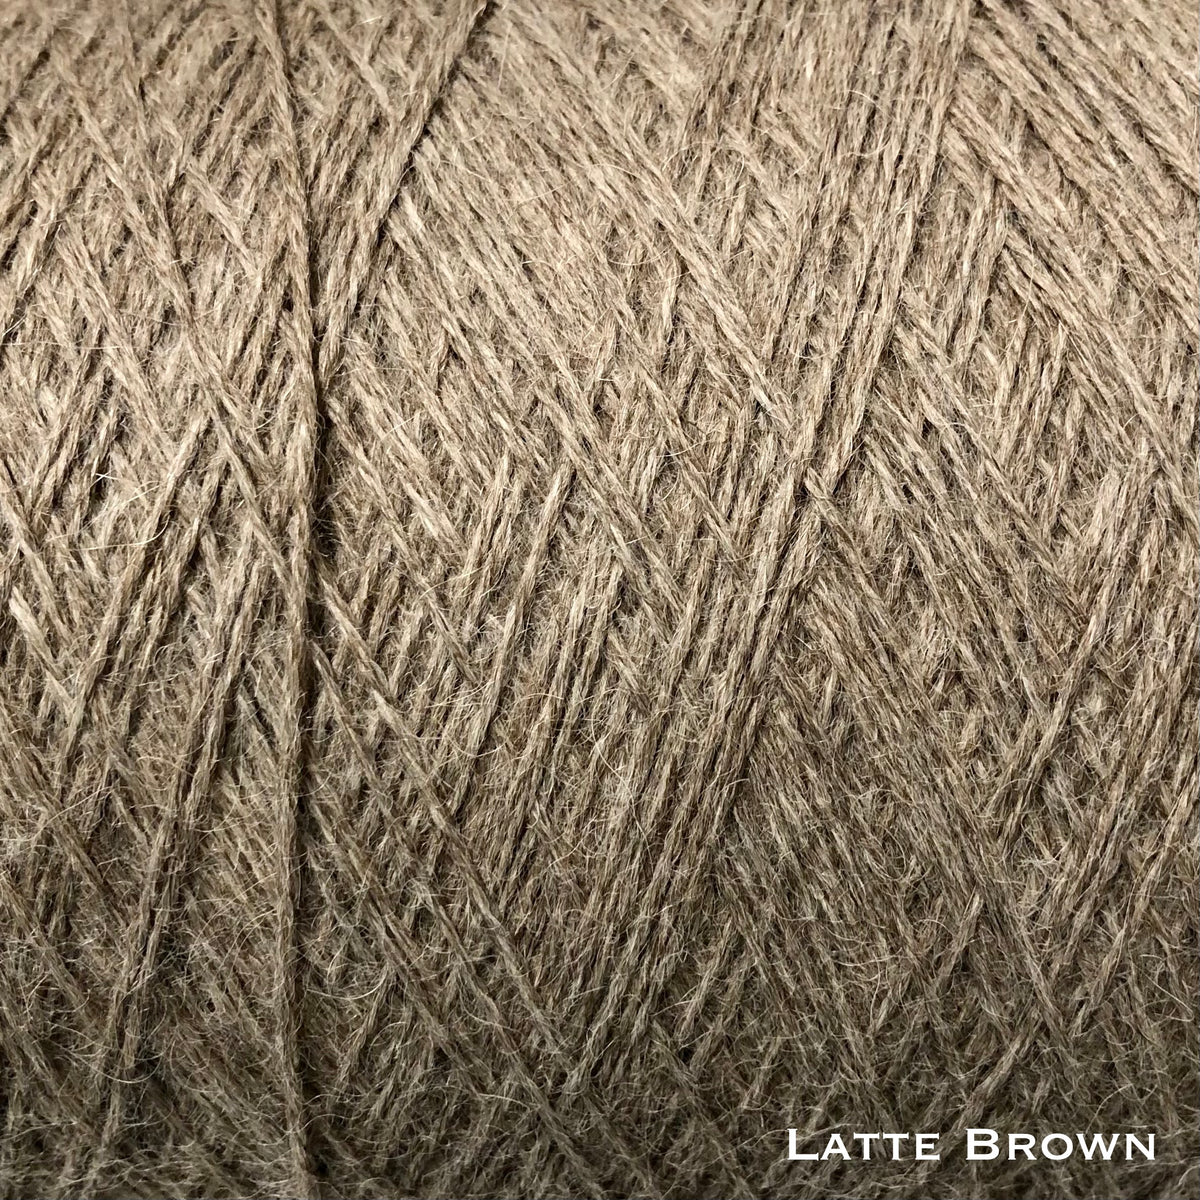 latte light brown sport weight alpaca wool yarn for knitting and crochet